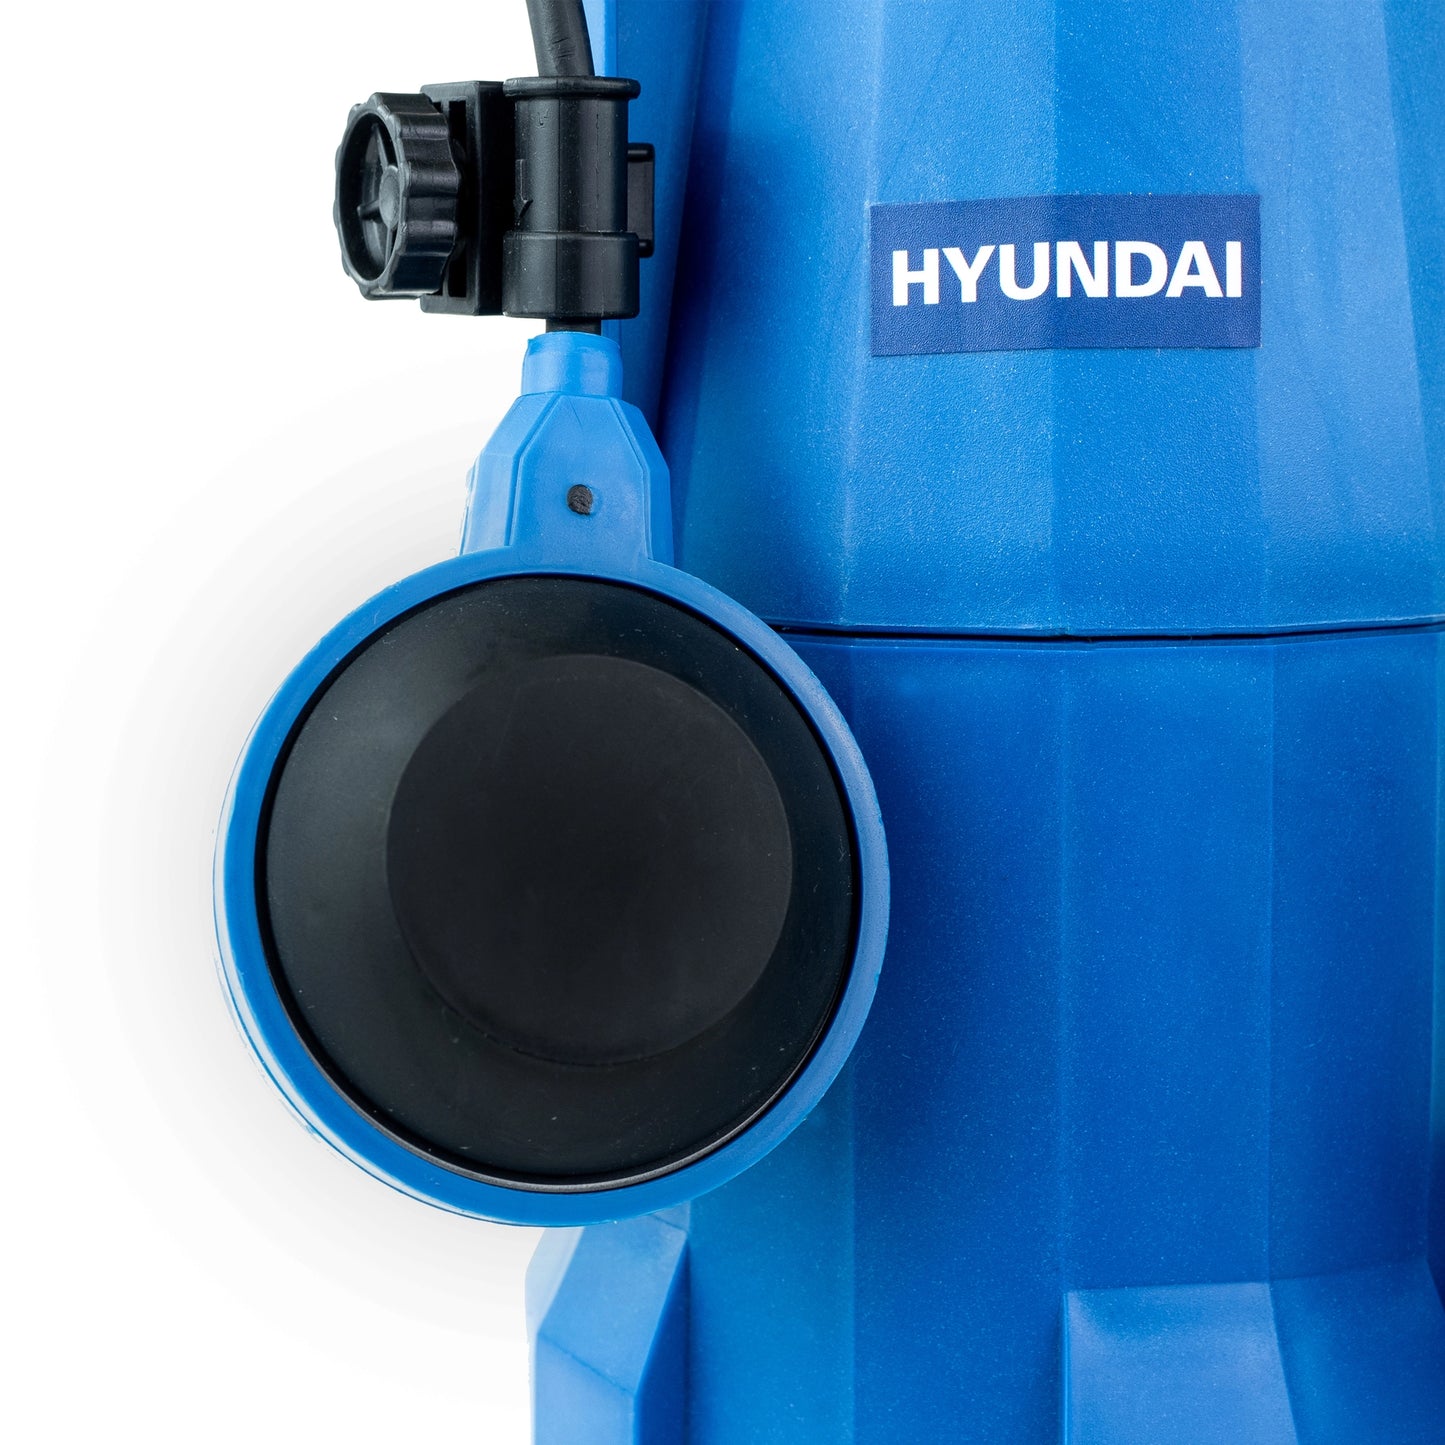 Hyundai HYSP1100CD Electric Clean & Dirty Water Submersible Pump